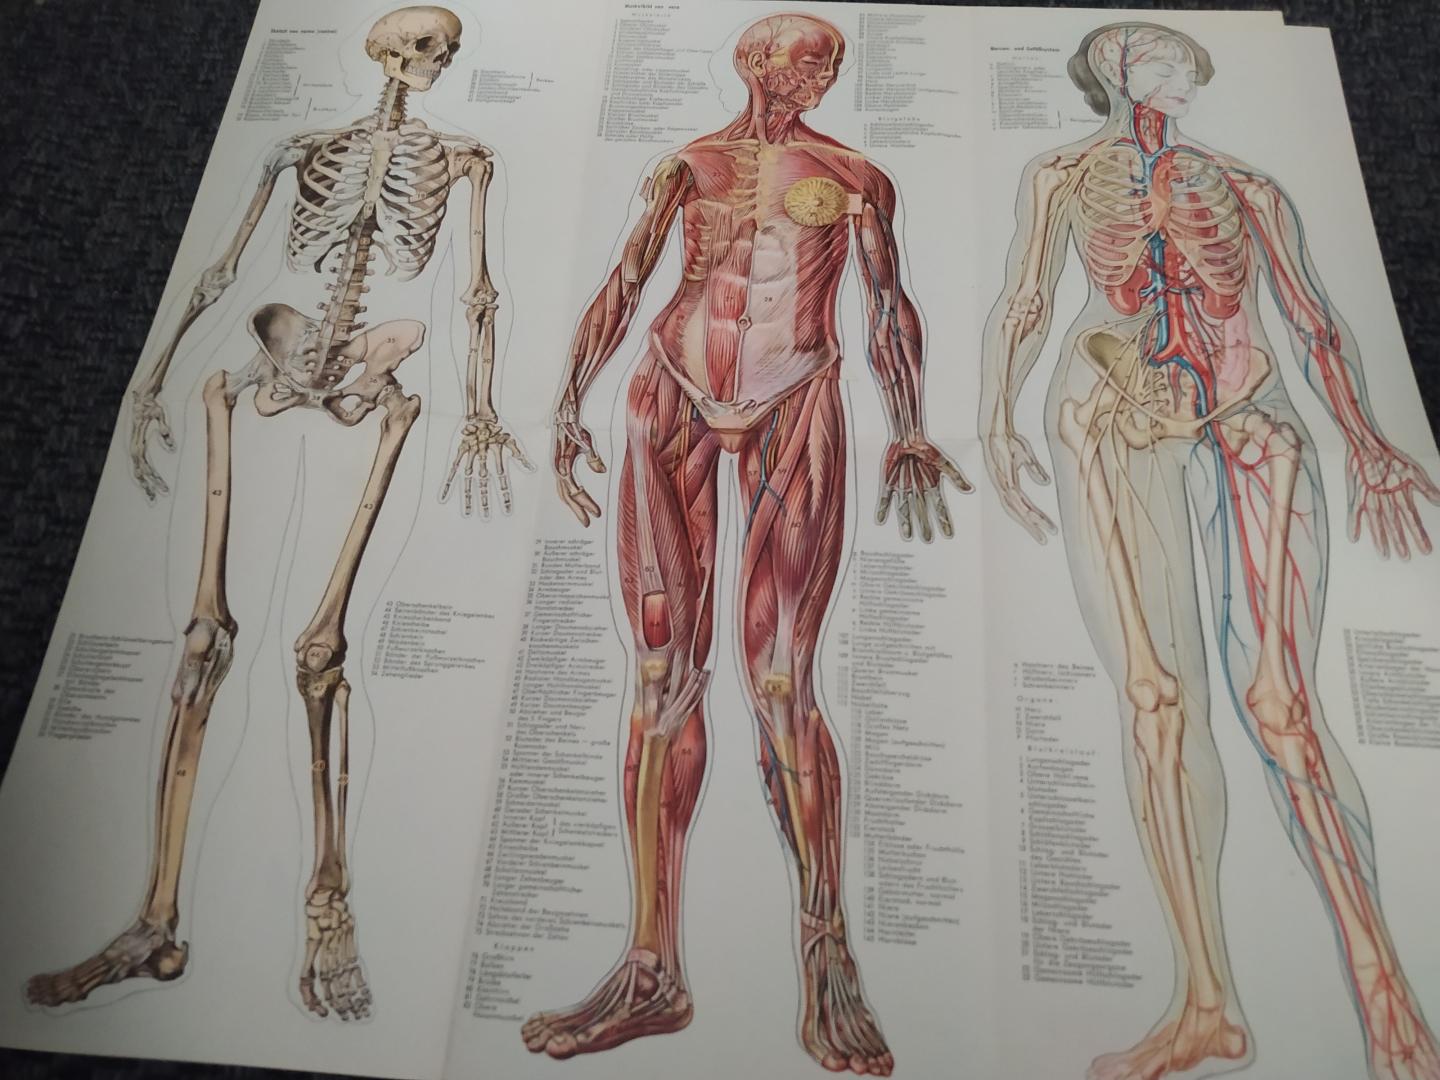  - Anatomische platen. copyright Lat. tekst